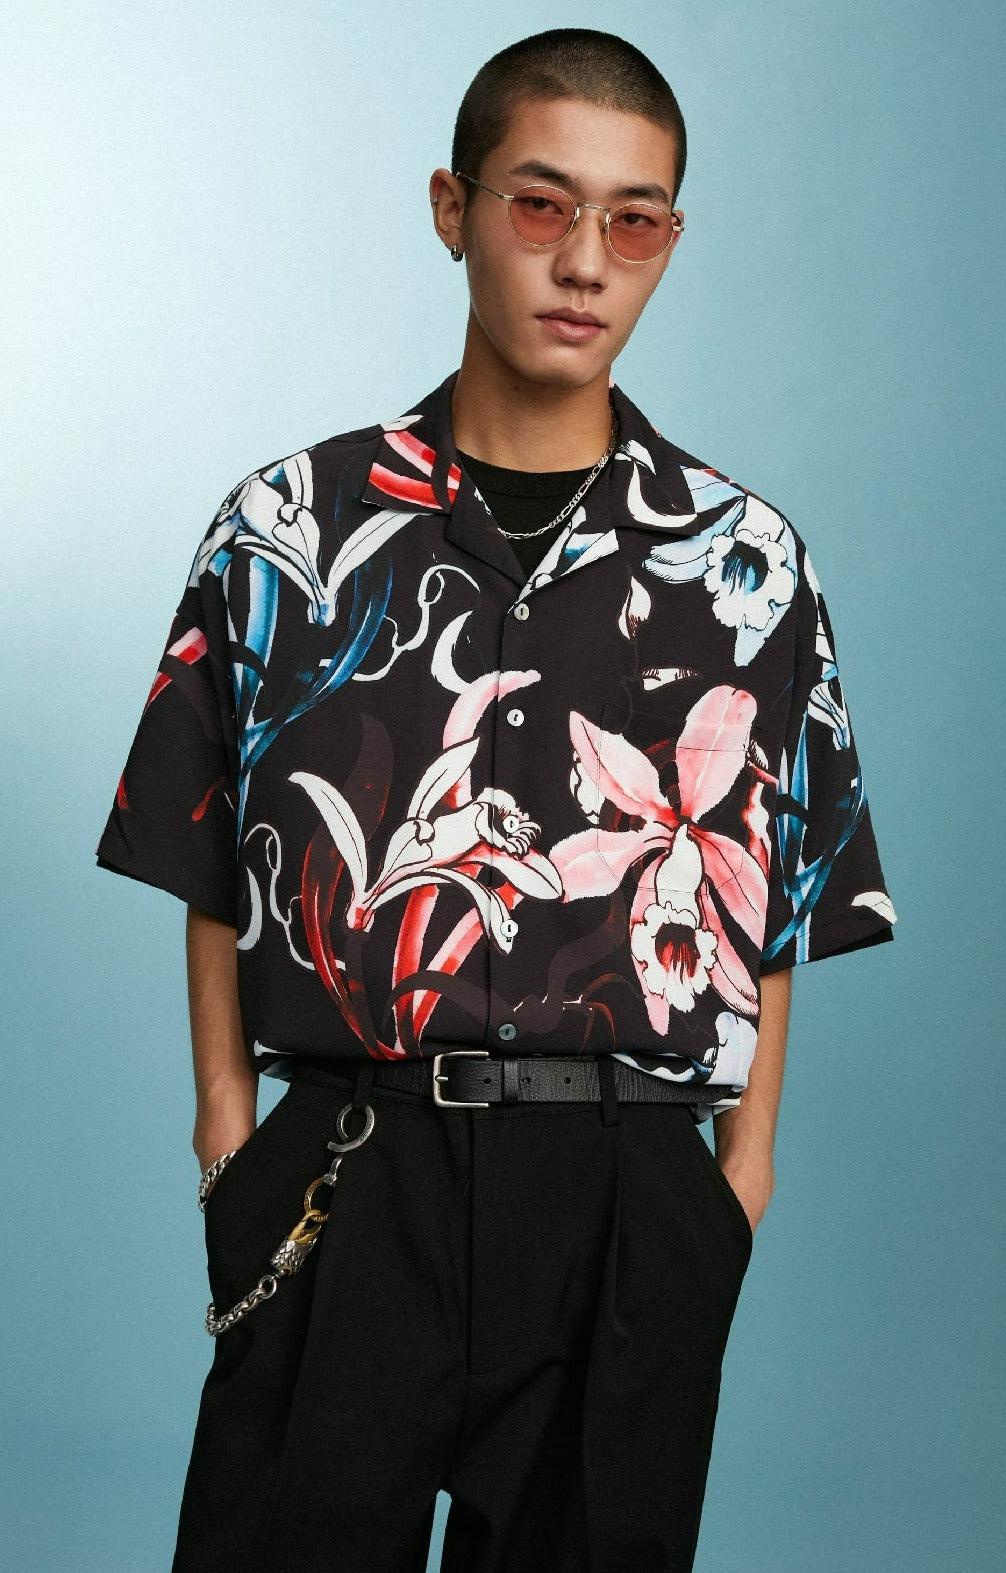 Floral Pattern Hawaiian Shirt Korean Street Fashion Shirt By Super Tofu Shop Online at OH Vault